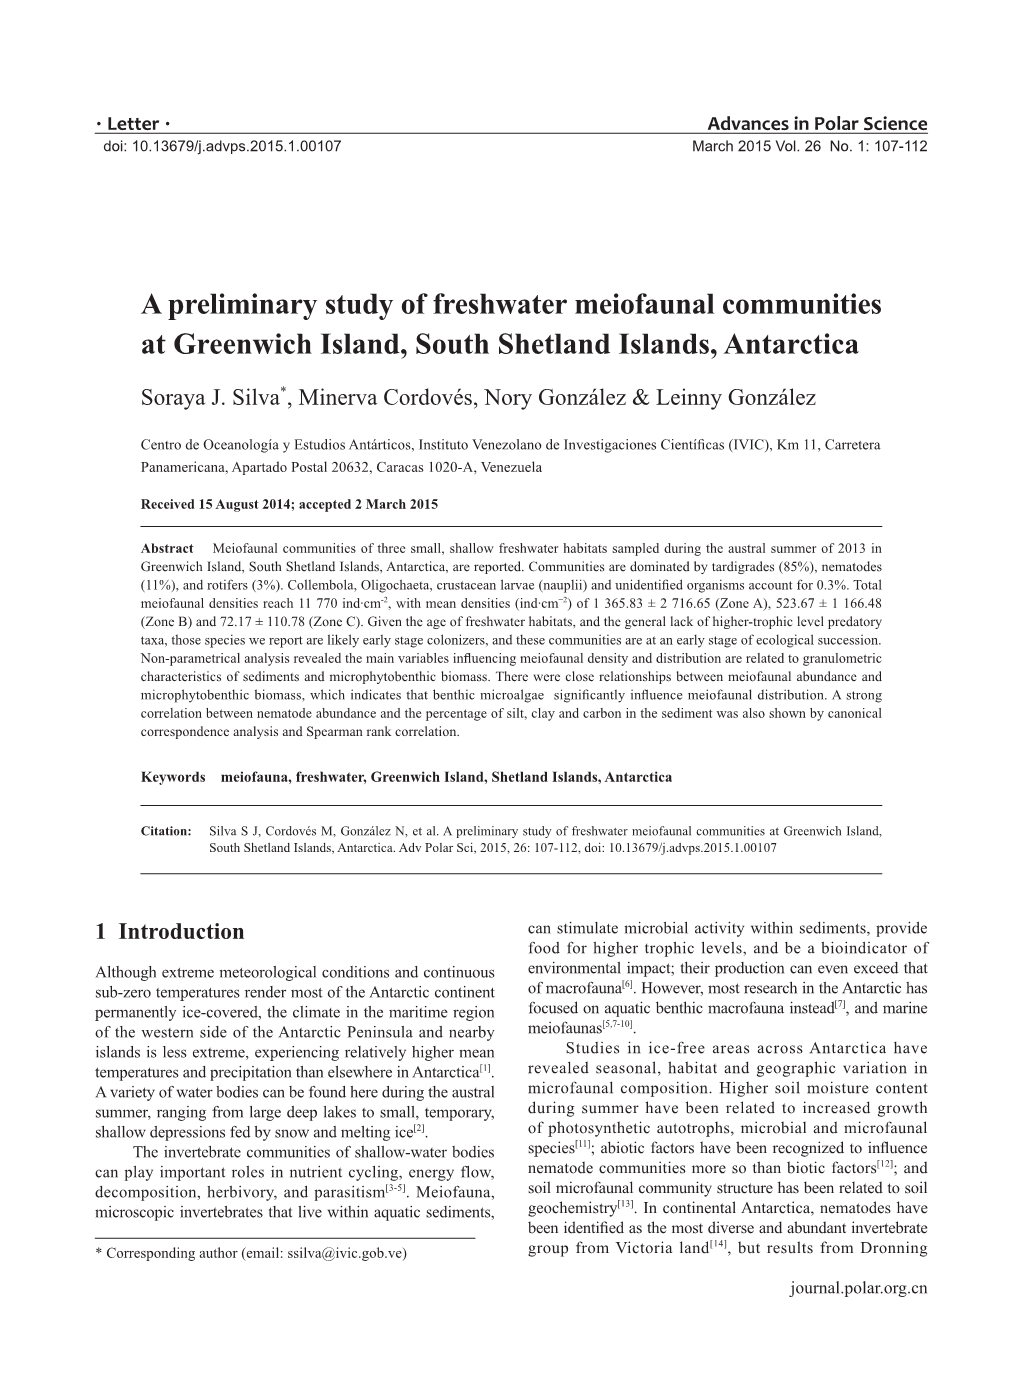 A Preliminary Study of Freshwater Meiofaunal Communities at Greenwich Island, South Shetland Islands, Antarctica